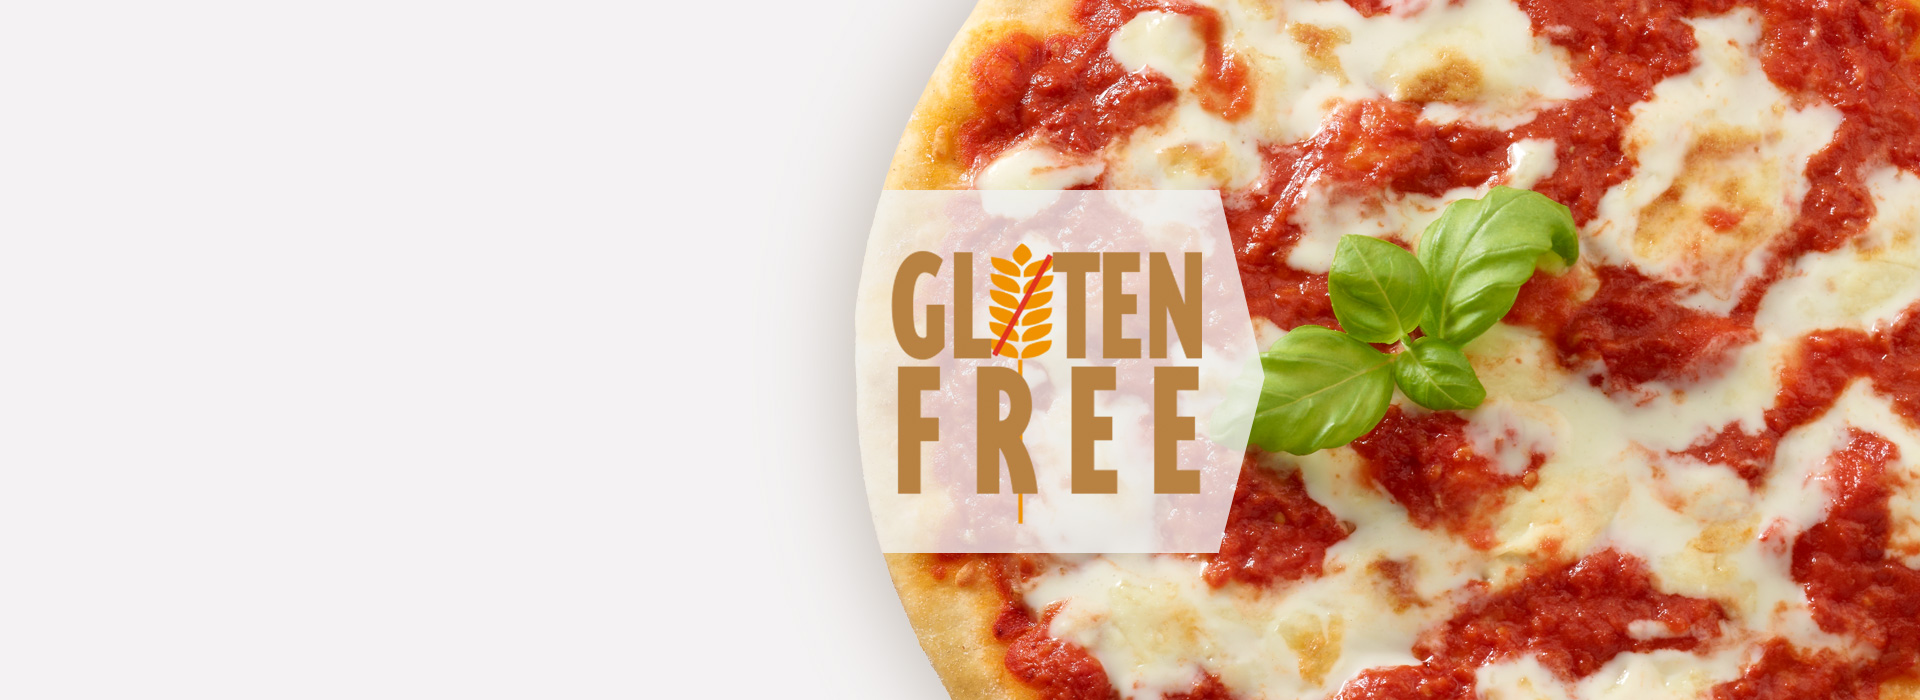 Pizza gluten free di Appetais